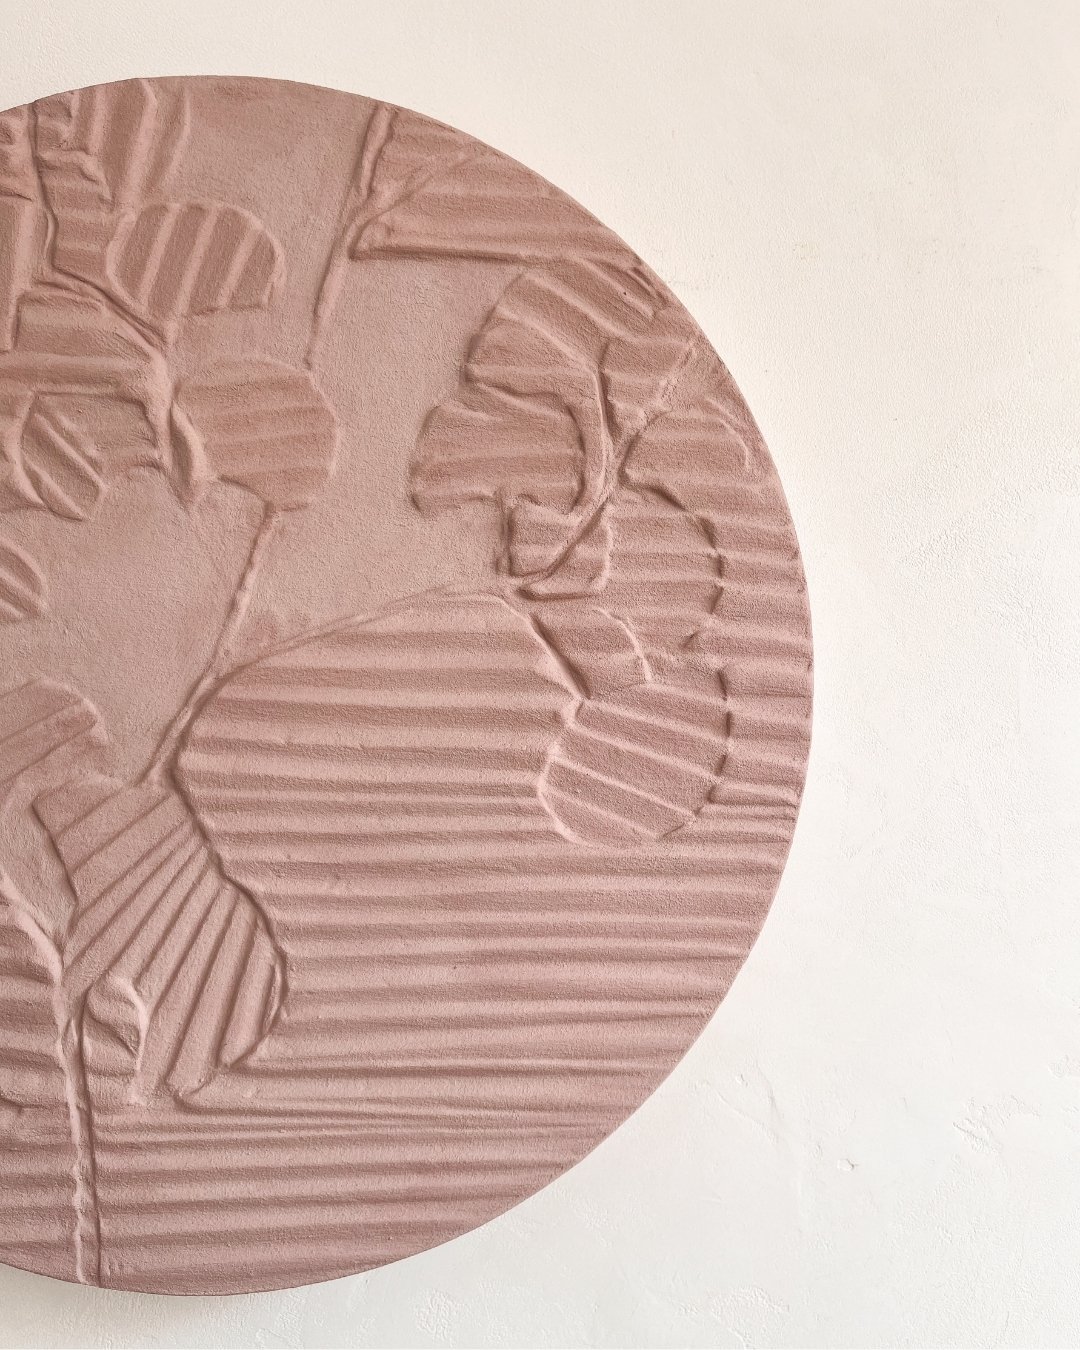 Ginkgo: a symbol of peace and vitality.

Latest mineral plaster art piece in monochrome dusty pink 💖

#plaster #artwork #textureart #texture #art #nature #serenity #inspiration #hongkongart #hongkongartist #elsajeandedieu #elsajeandedieustudio #copp